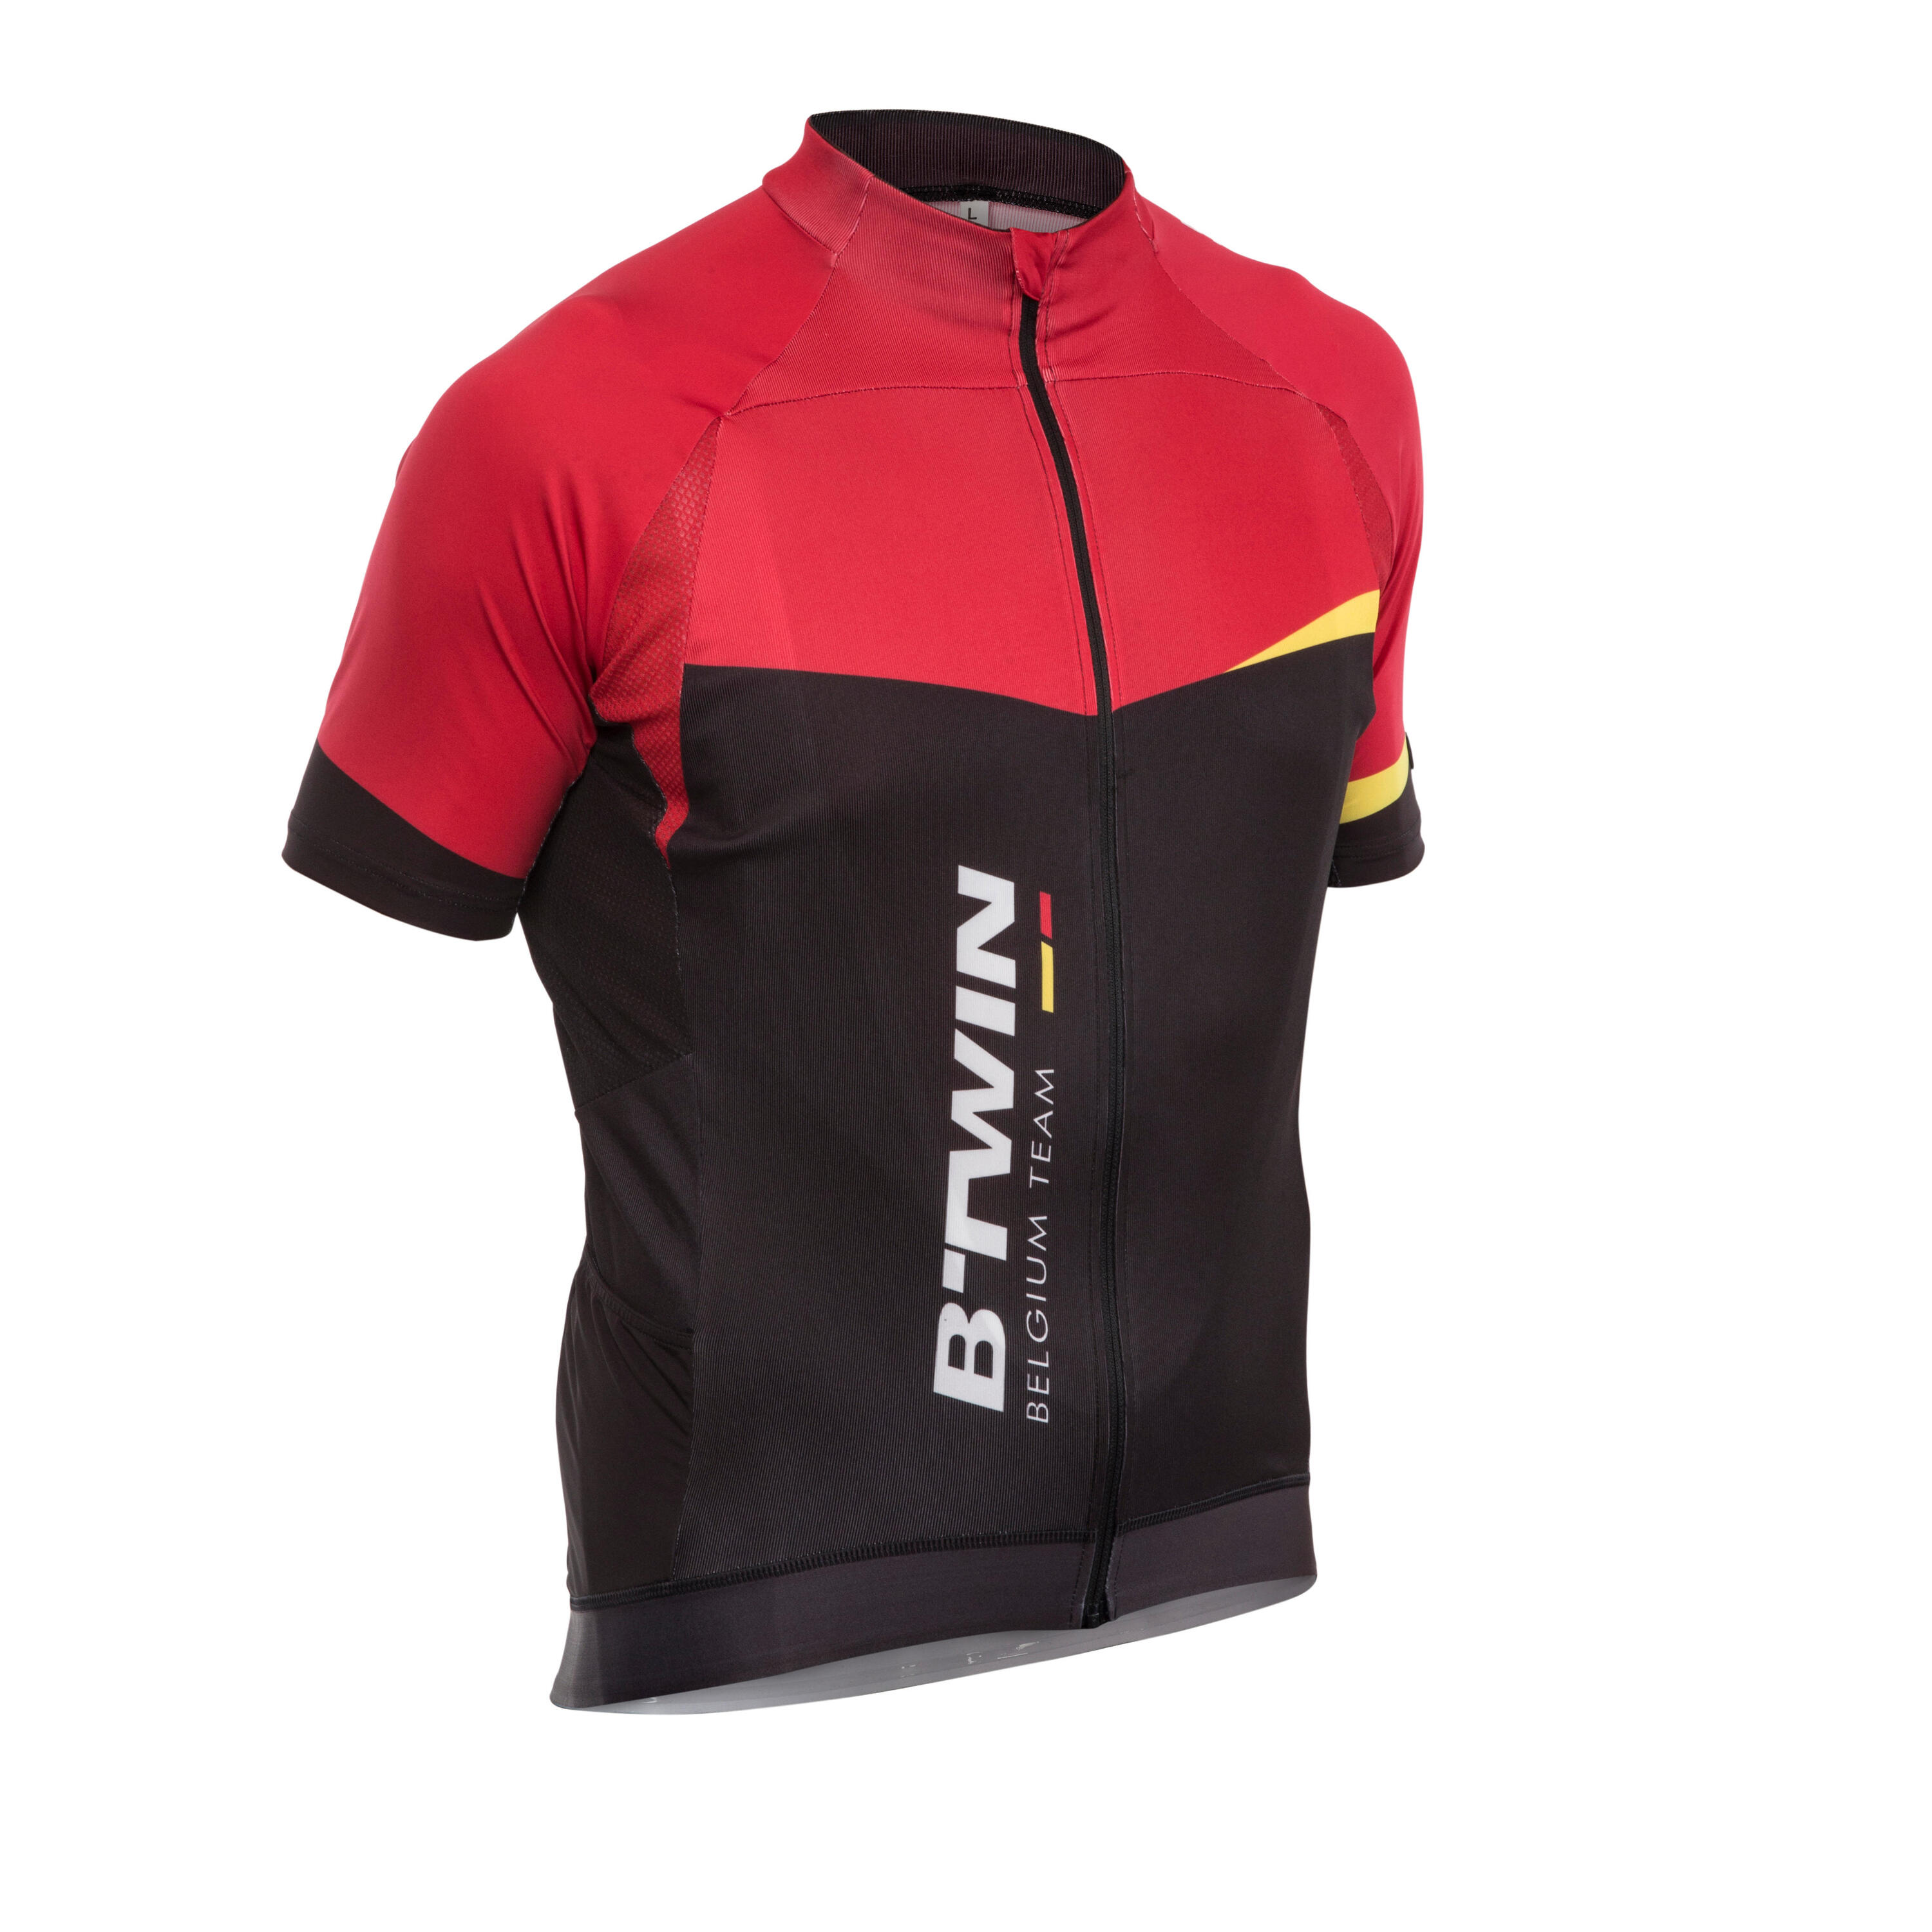 BTWIN 520 Short-Sleeved Cycling Jersey - Belgium